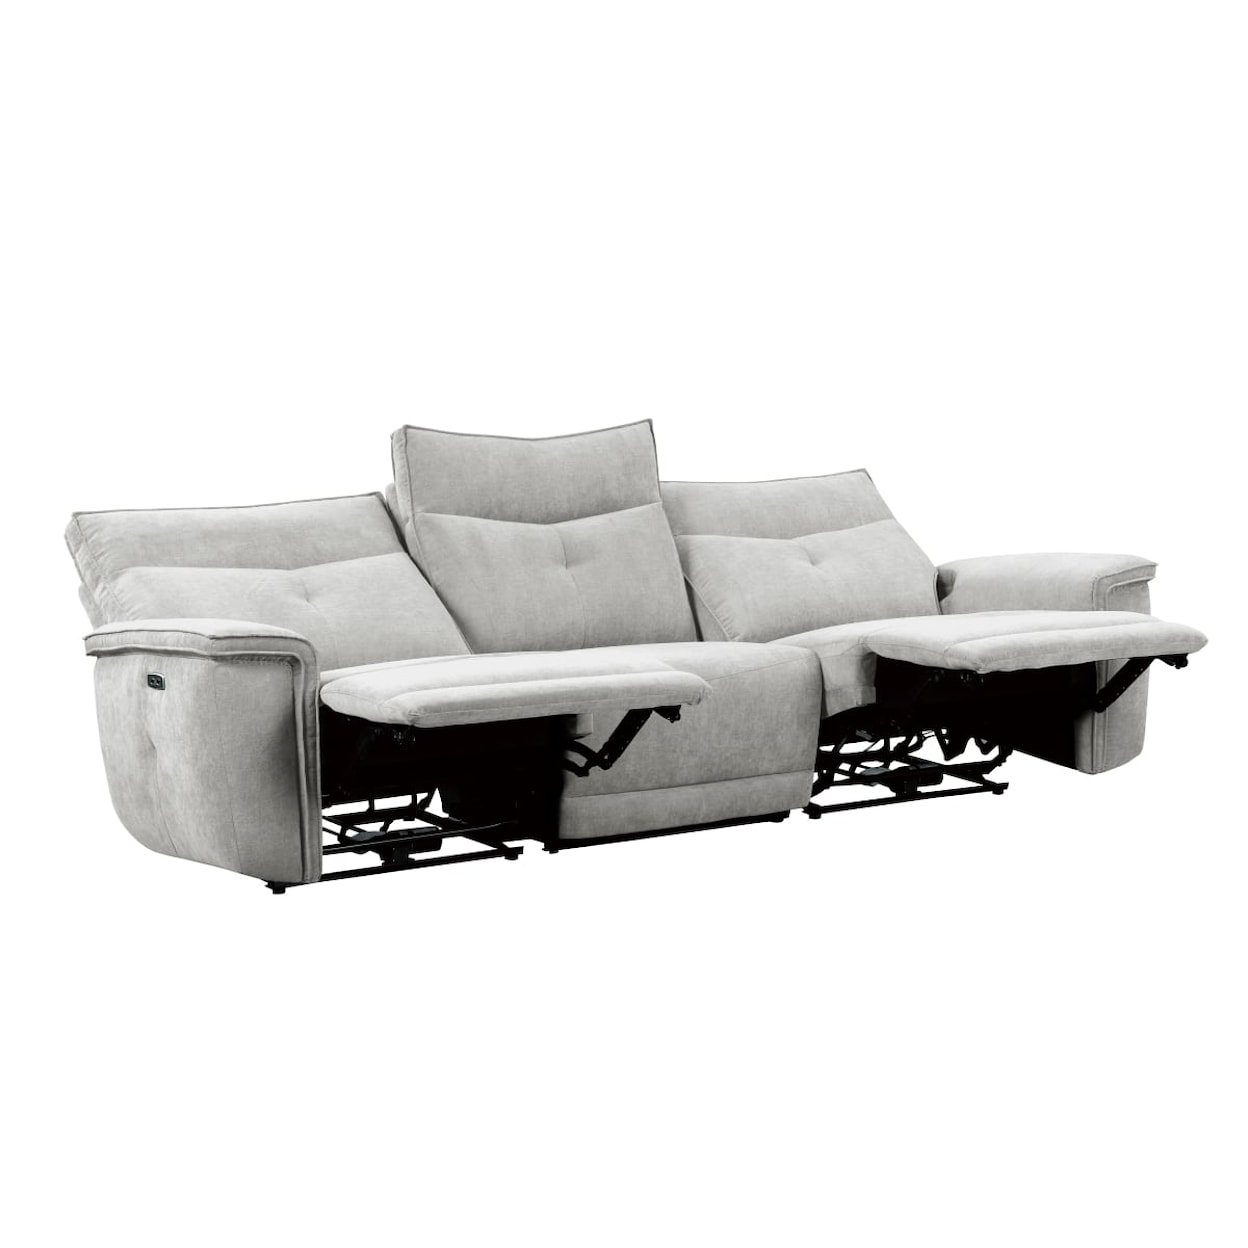 Homelegance Furniture Tesoro Double Reclining Sofa